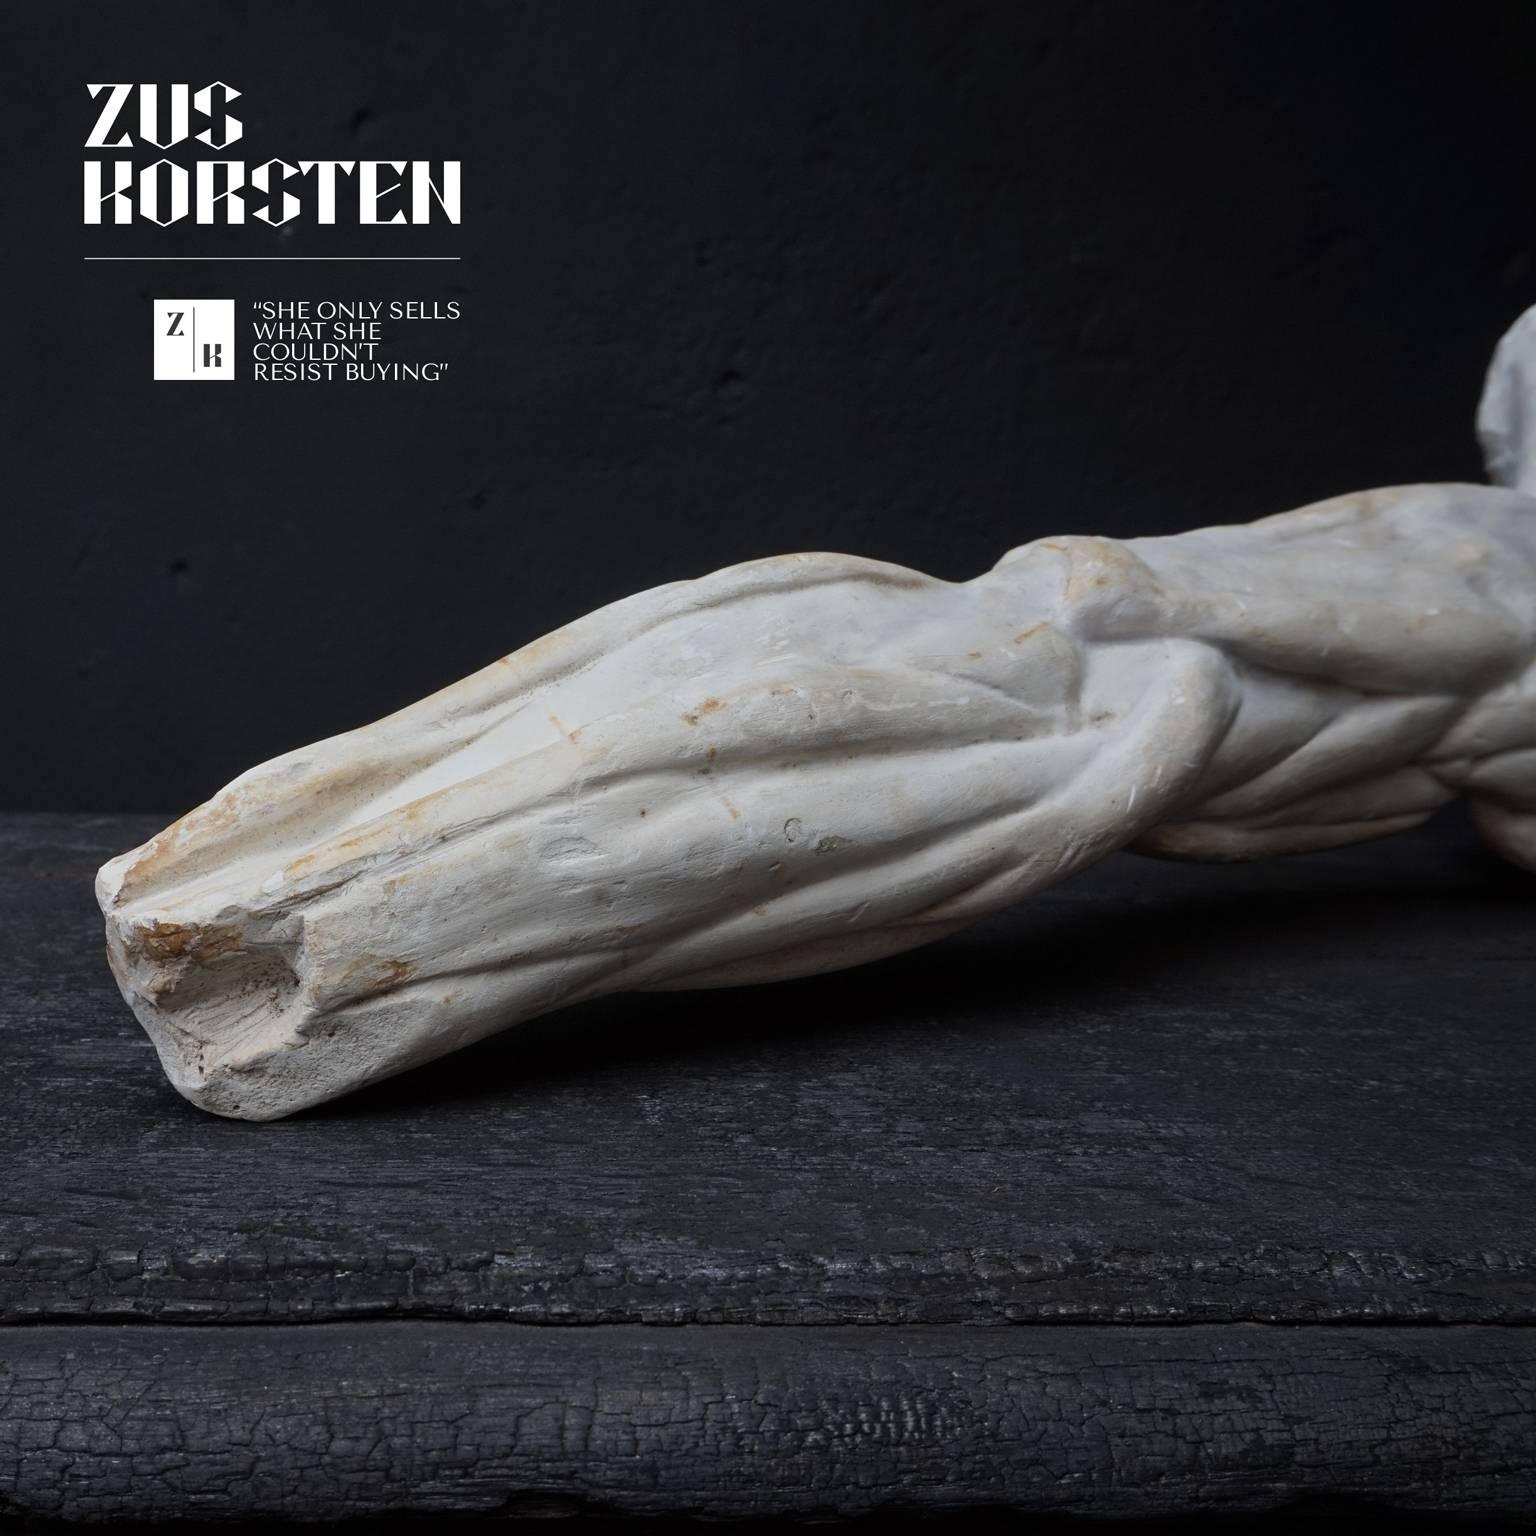 Plaster Study of Human Arm from the Rijksacademie Amsterdam 2